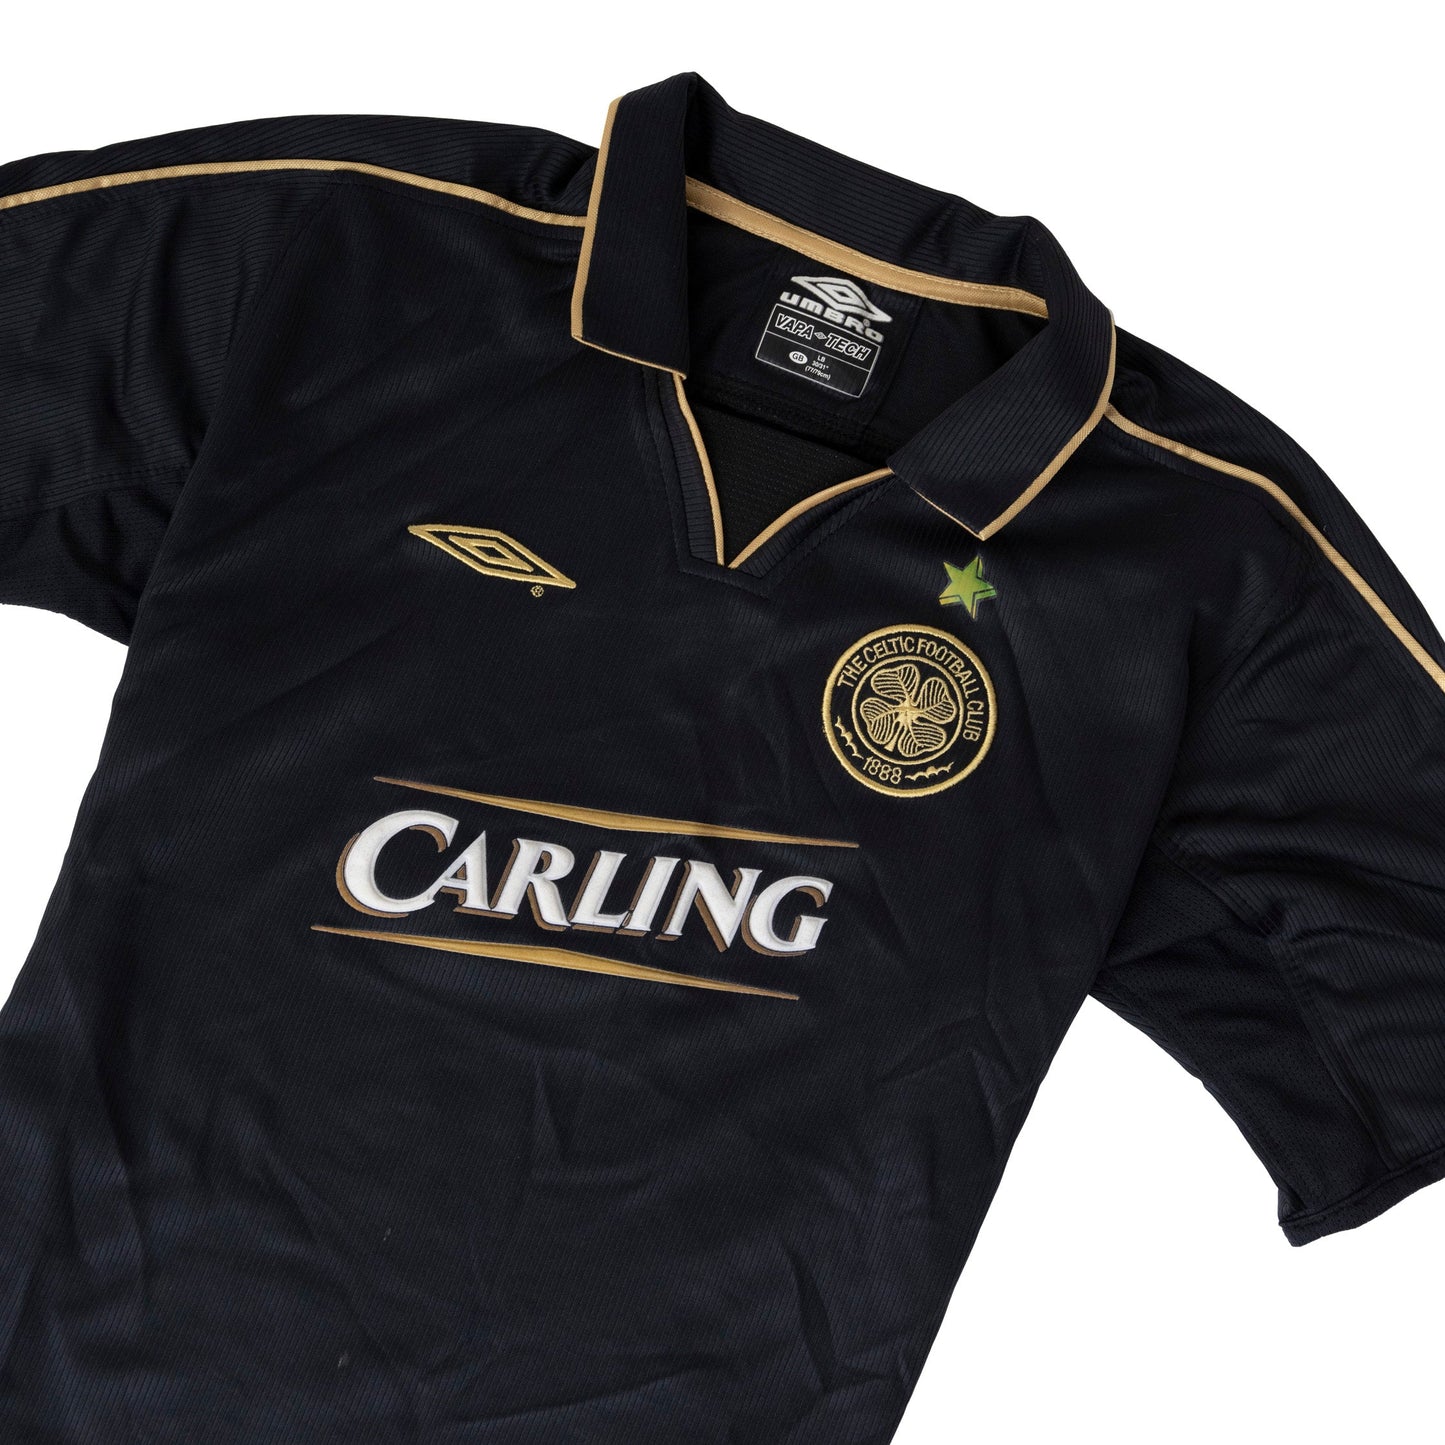 2003/04 Celtic x Umbro Away Football Shirt